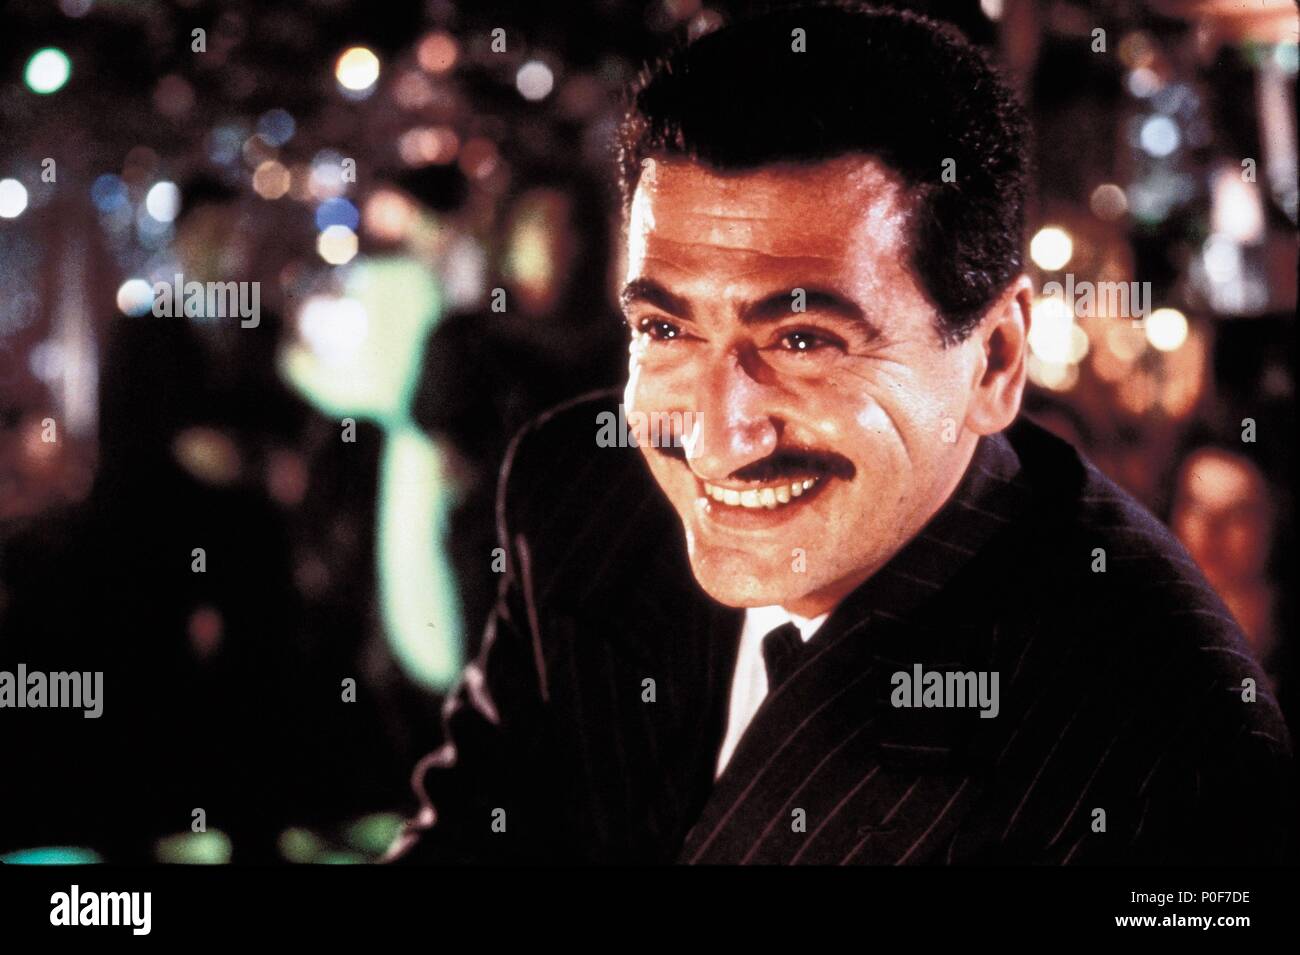 Original Film Title: FRANTIC.  English Title: FRANTIC.  Film Director: ROMAN POLANSKI.  Year: 1988.  Stars: JOHN MAHONEY. Credit: WARNER BROTHERS / Album Stock Photo